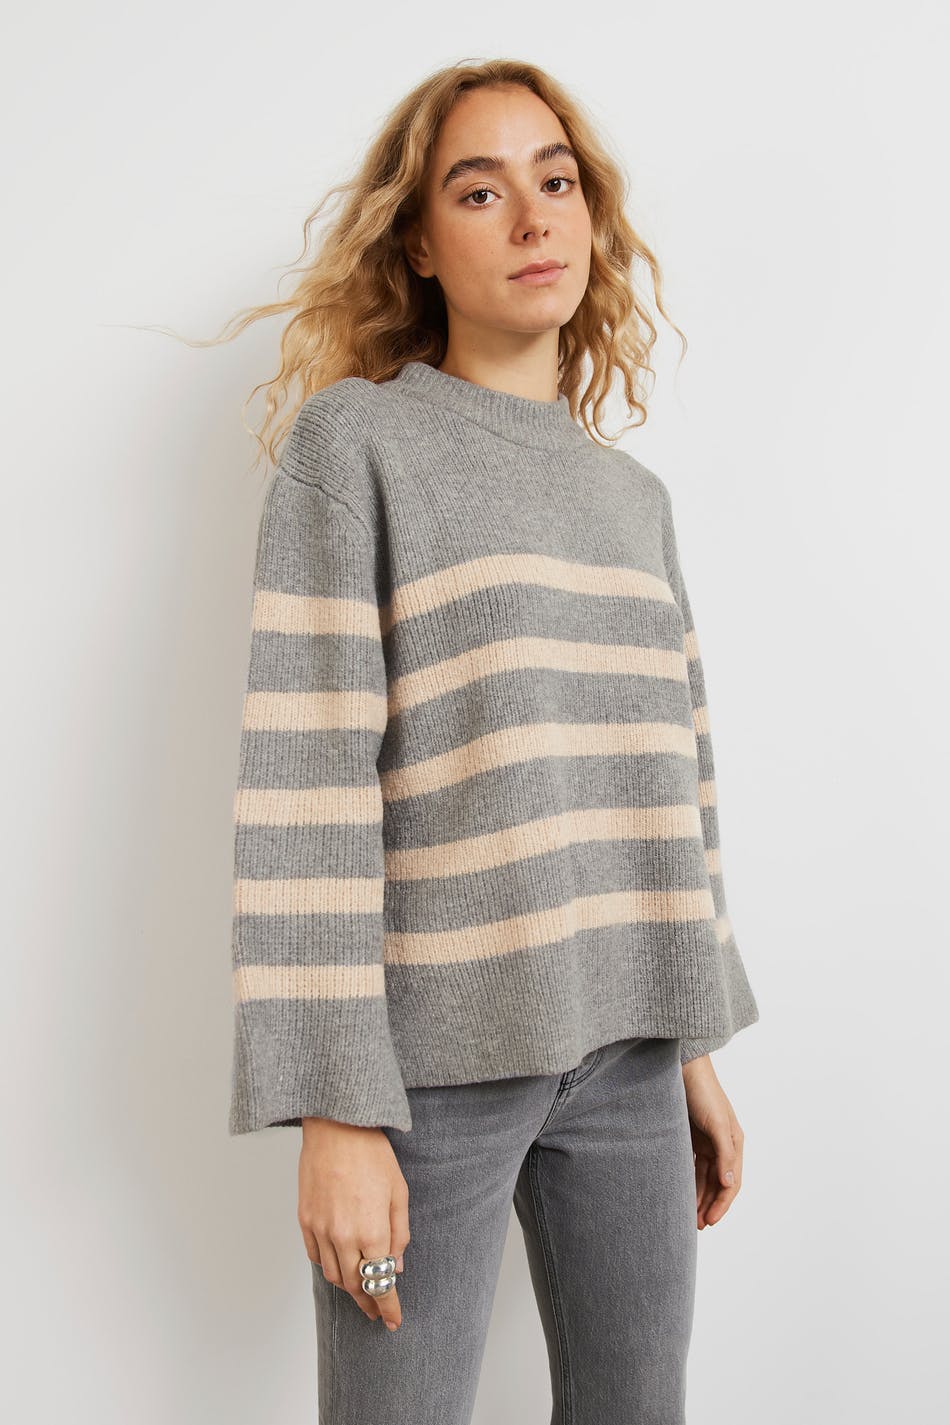 se tv Overskæg Symptomer Alba knitted sweater - Gina Tricot